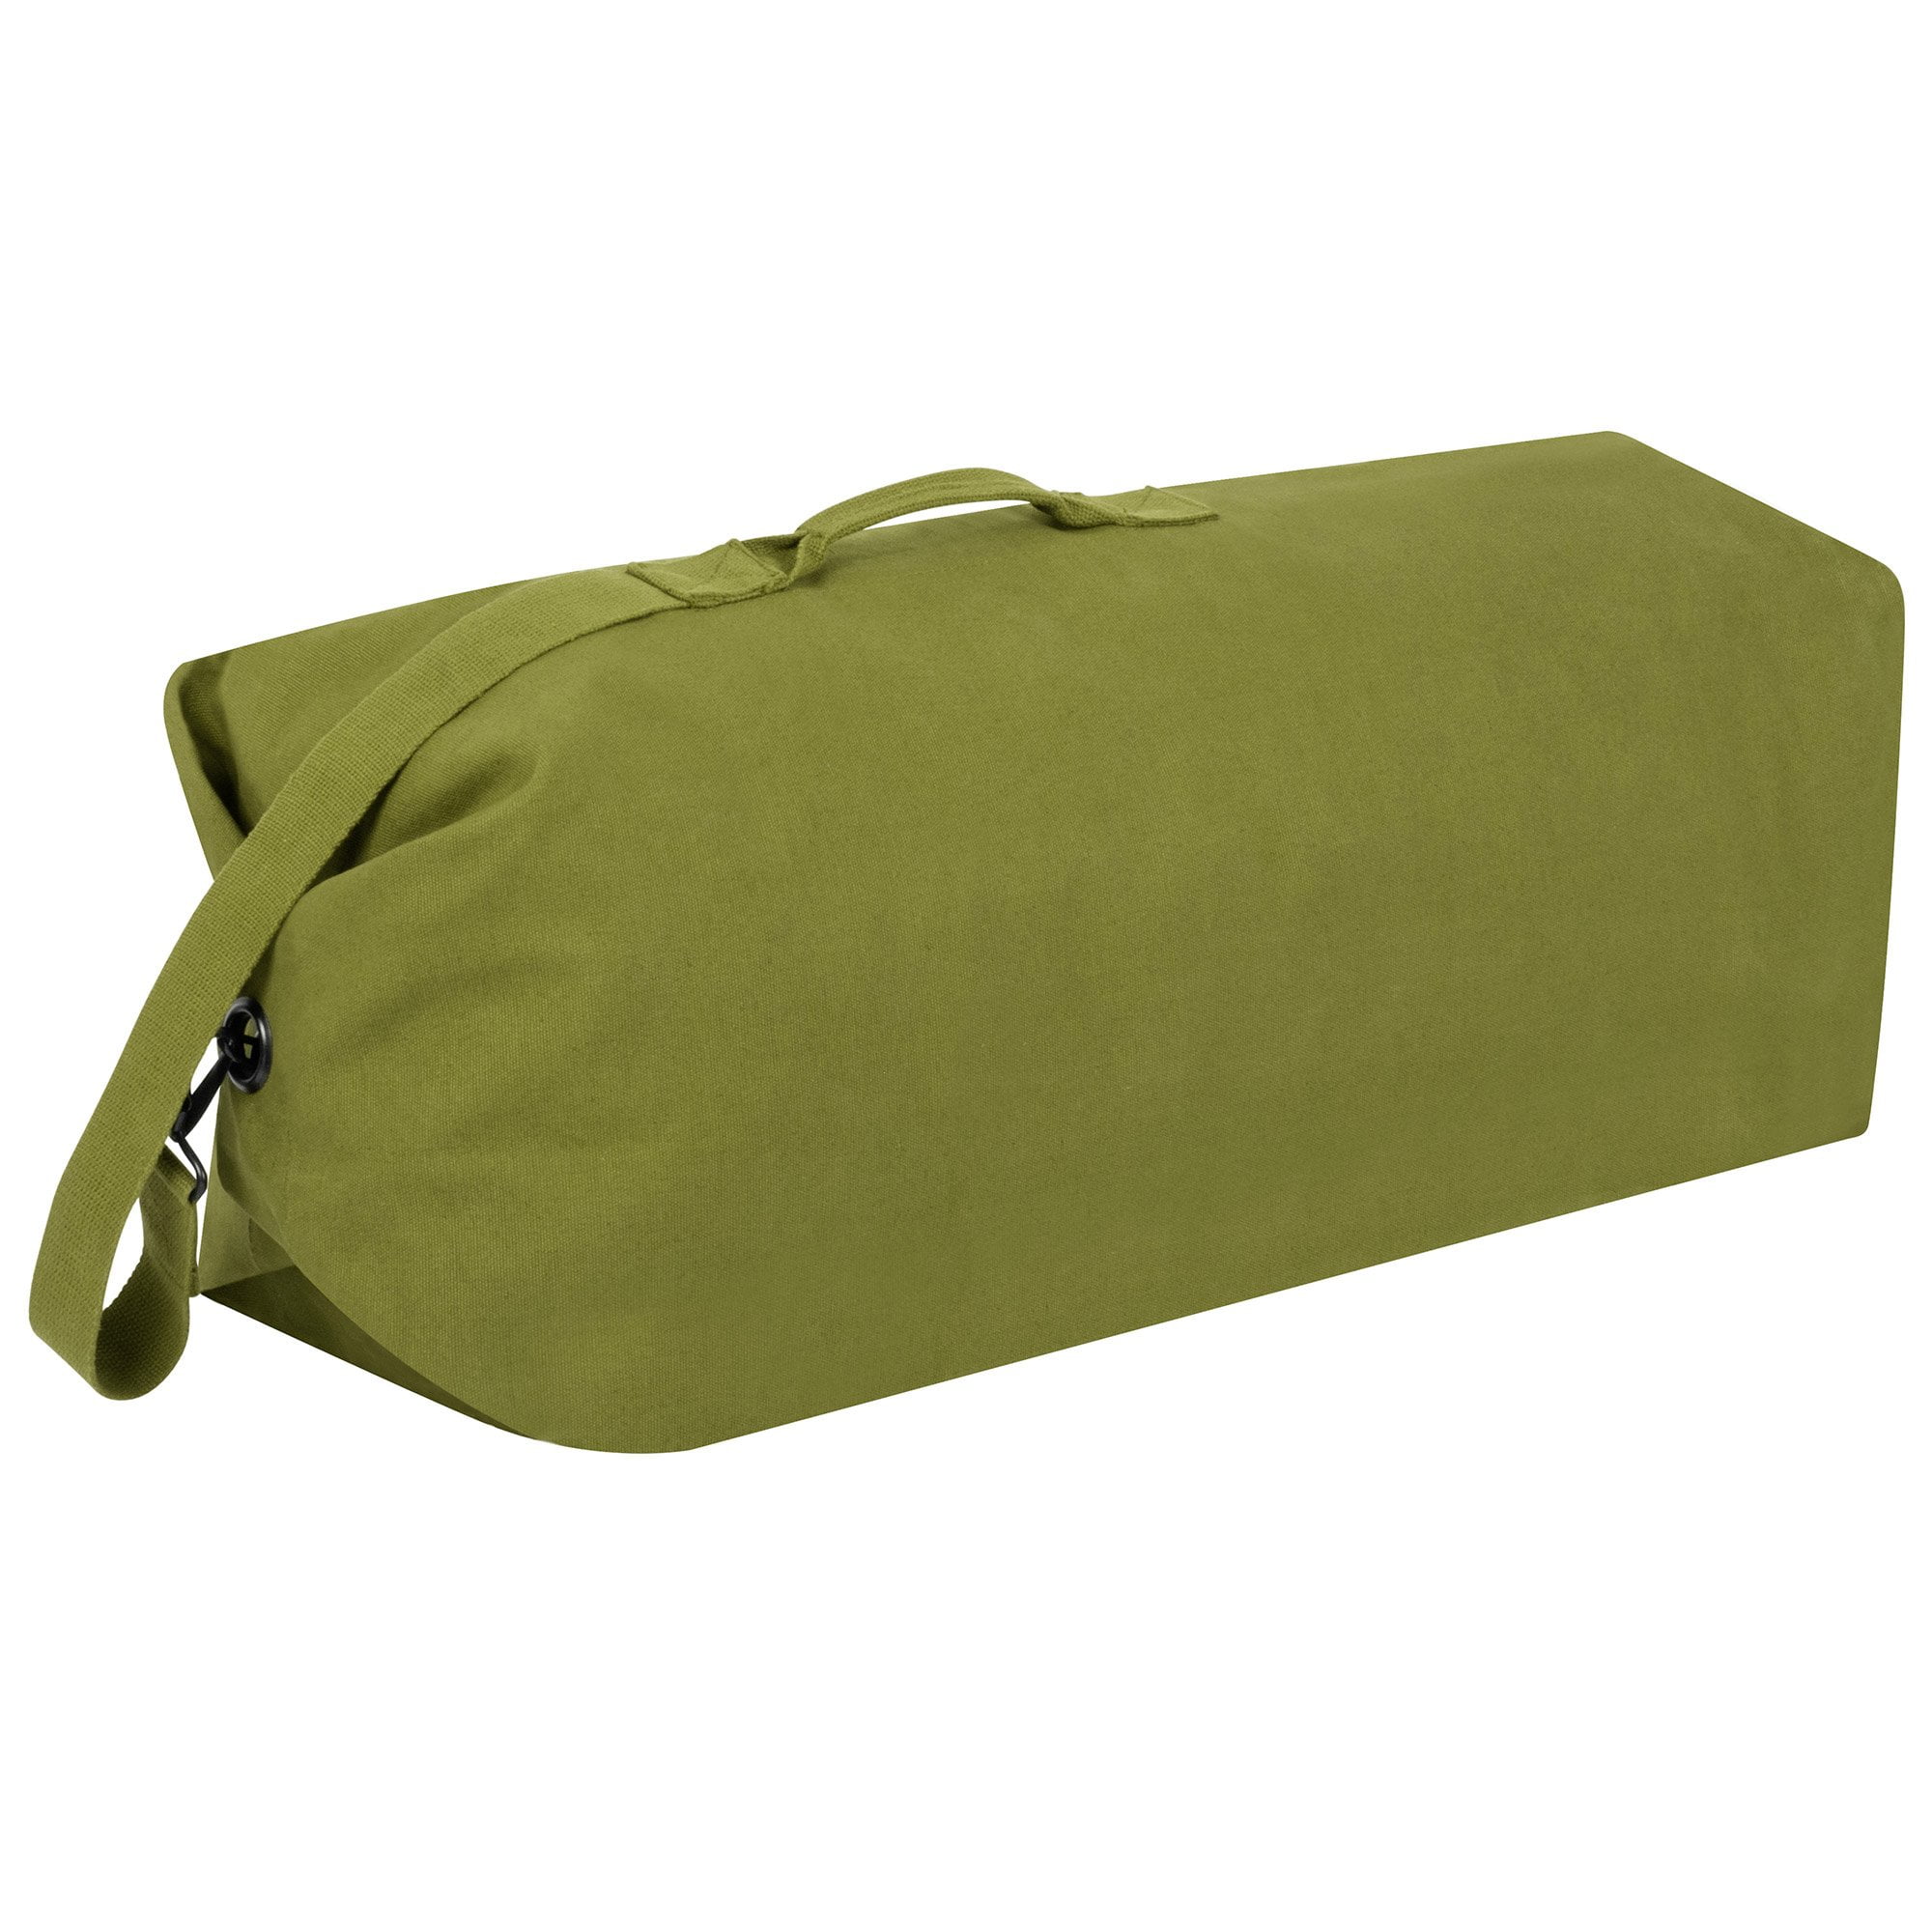 military canvas duffle bag